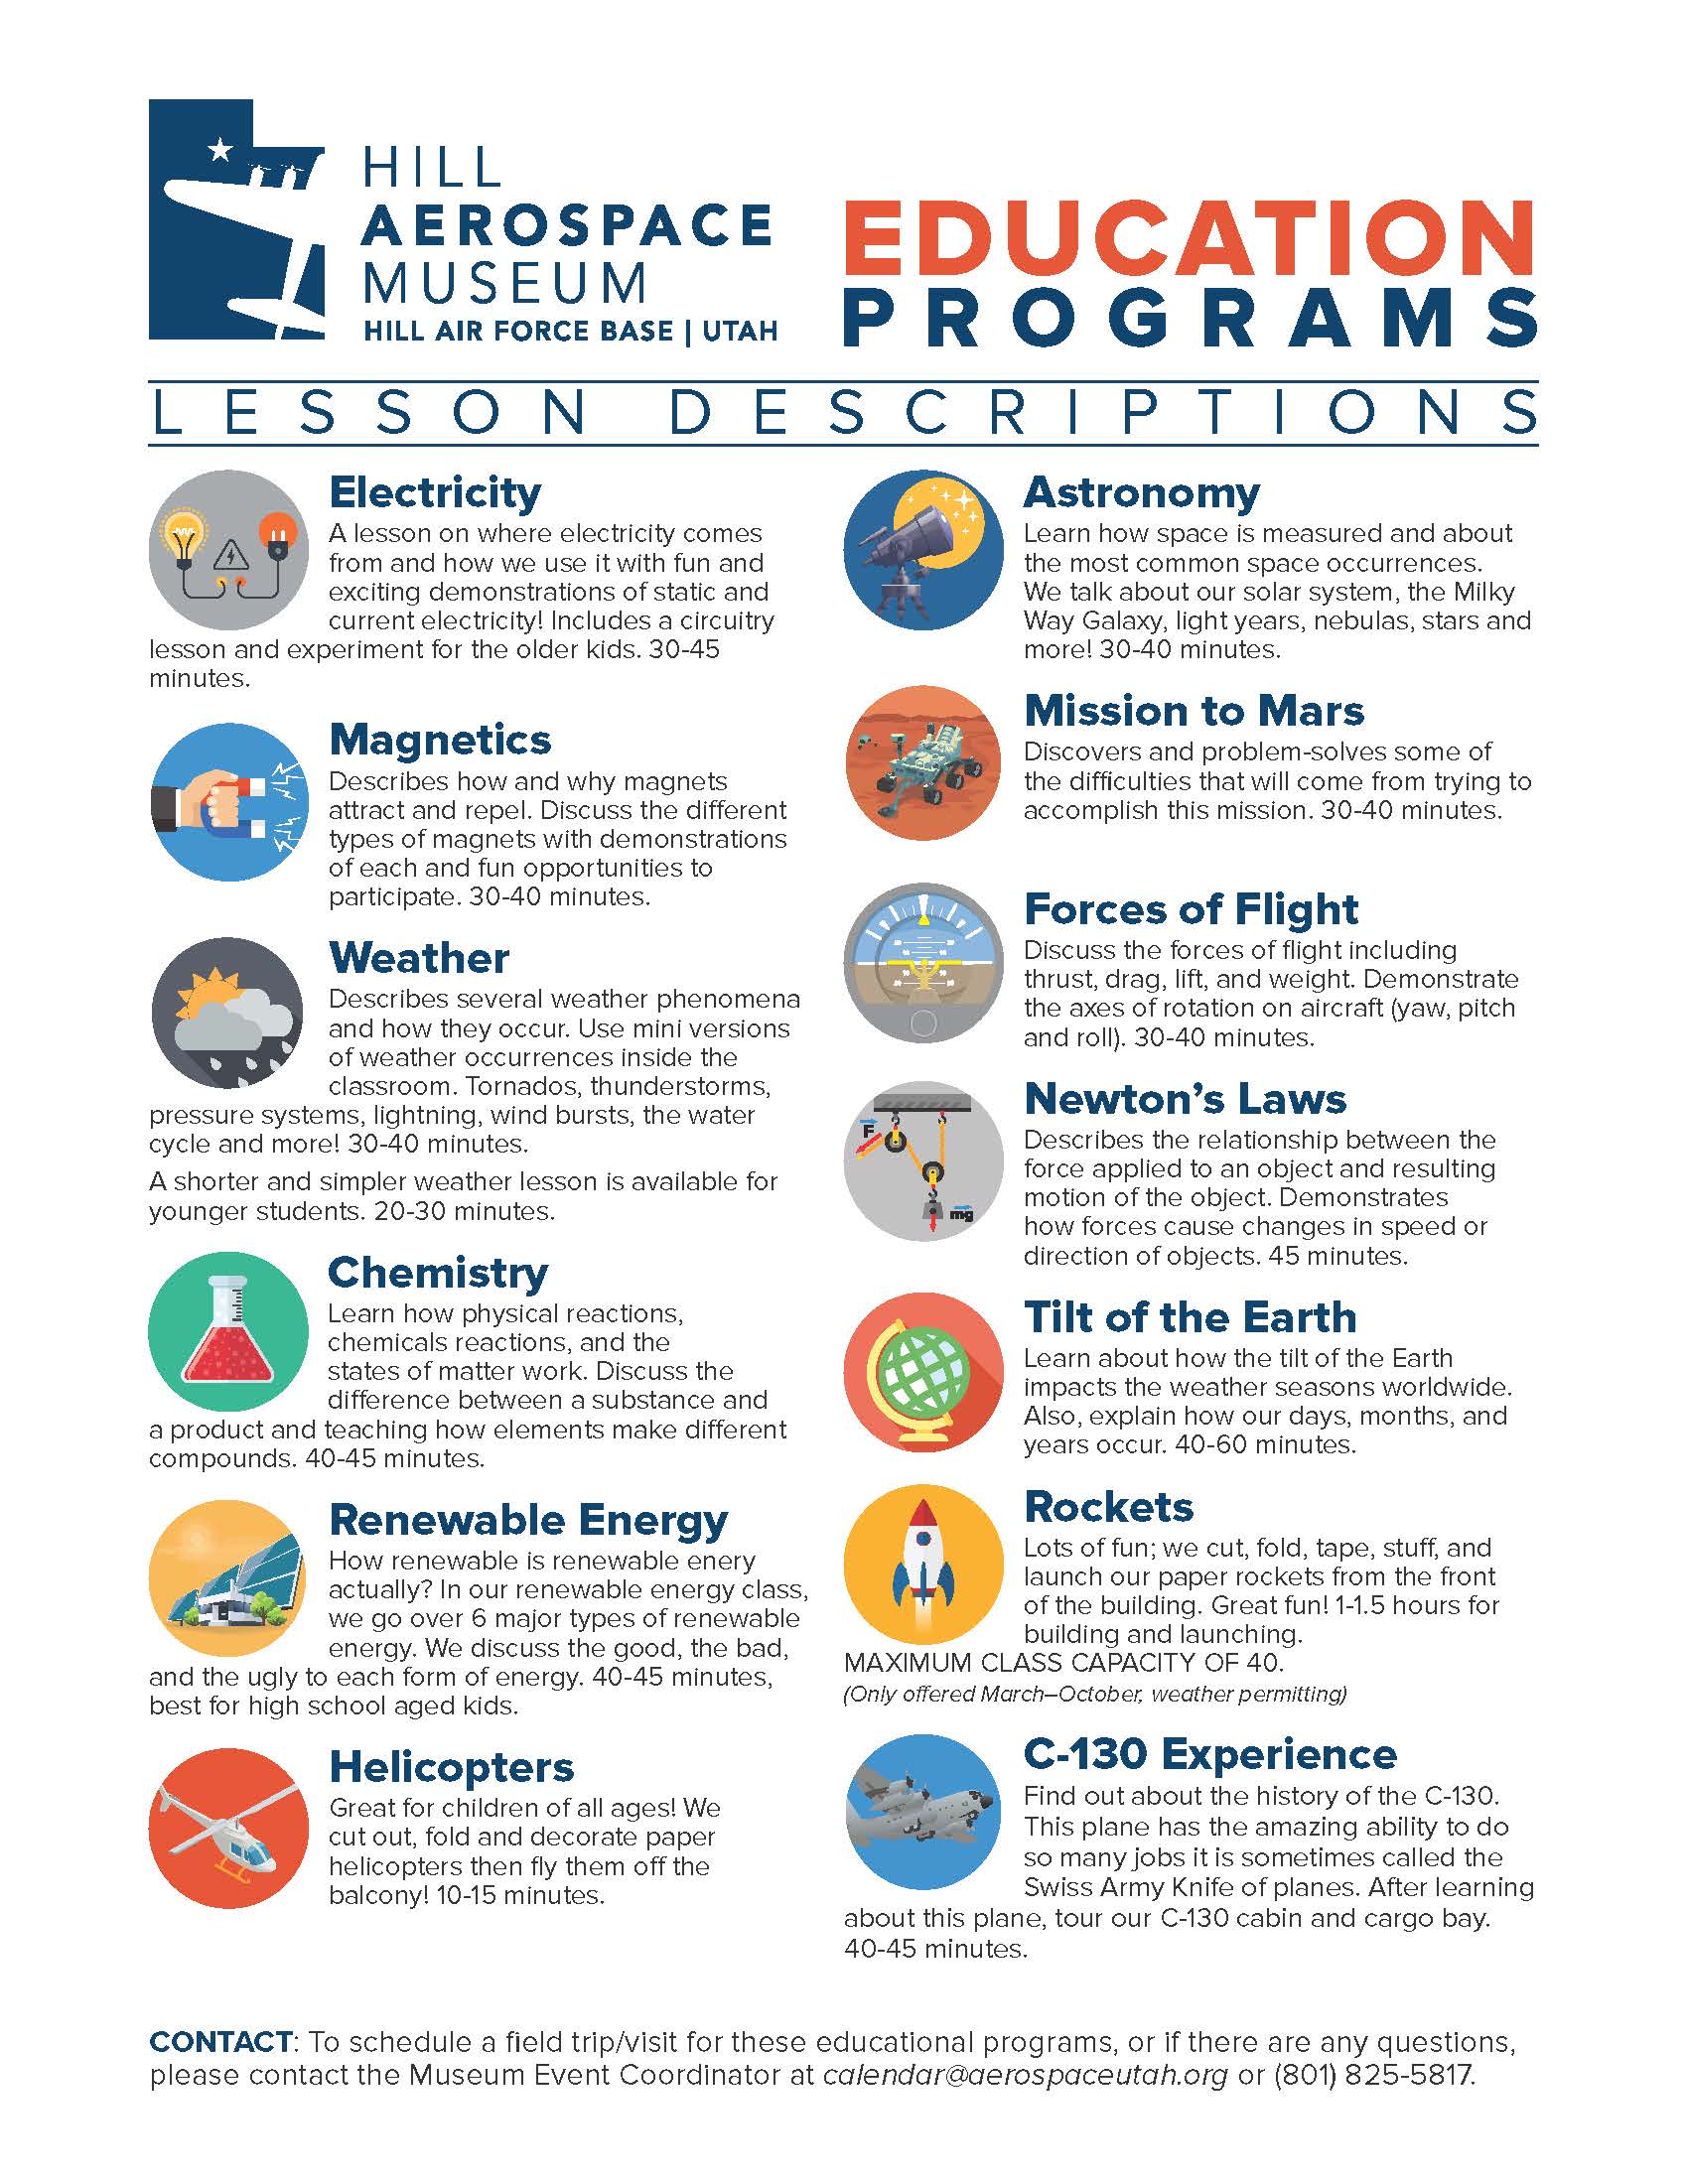 Hill Aerospace Museum Education Programs Document